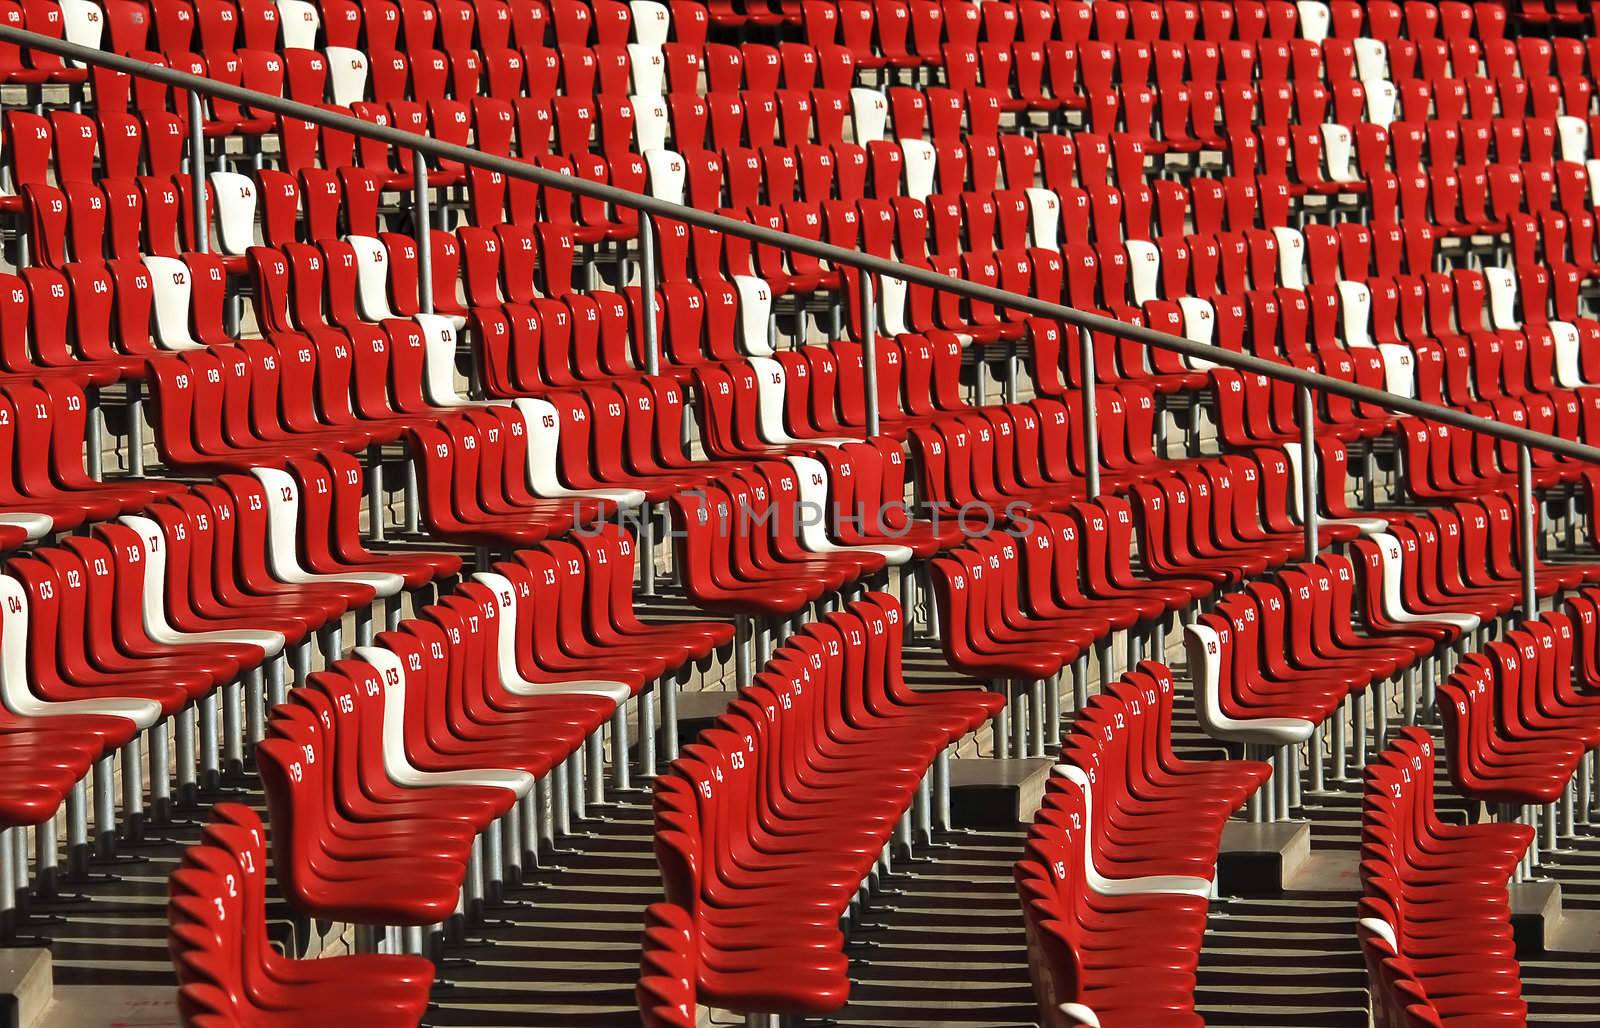 Stadium seats by Vectorex